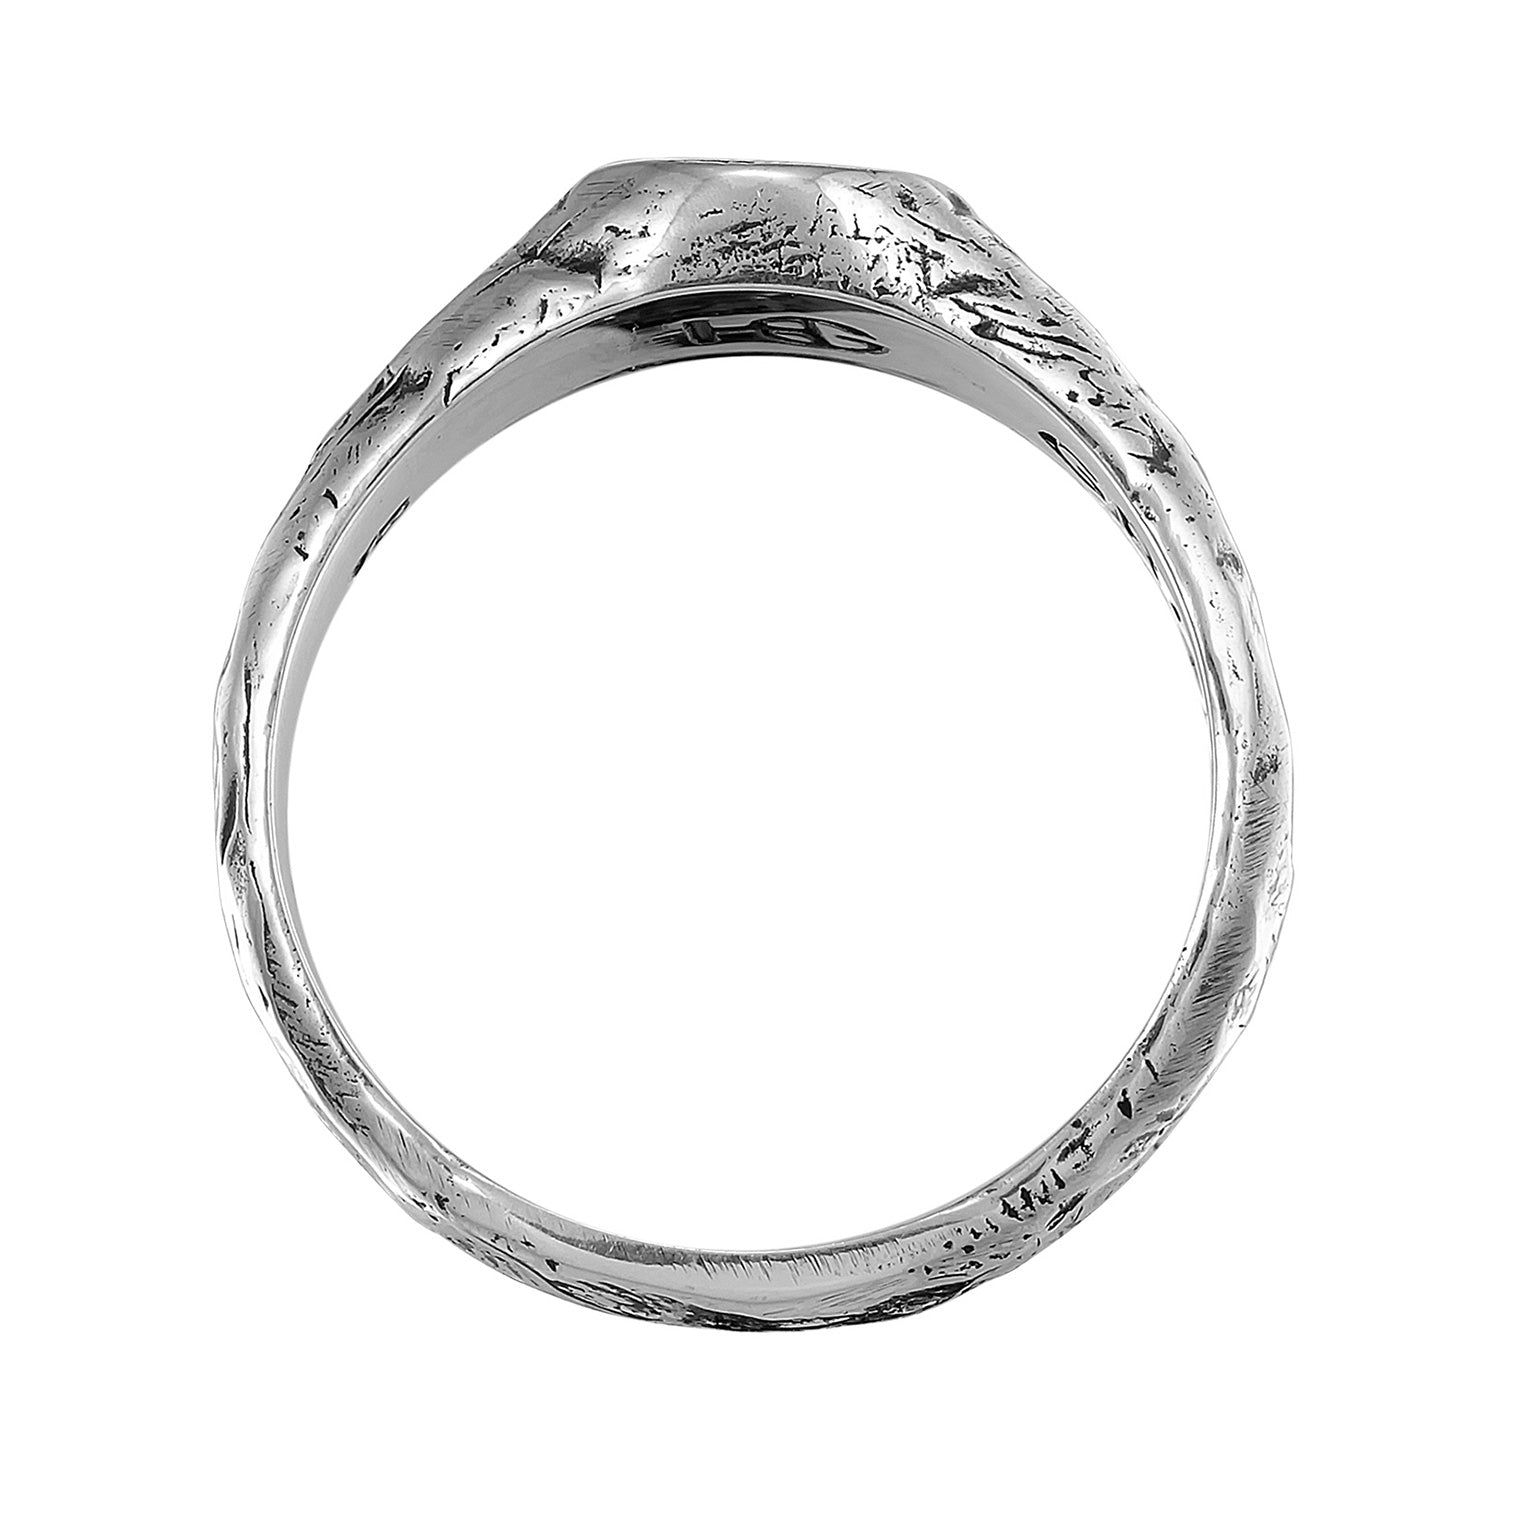 Silber - HAZE & GLORY | Lava Agung Silber Ring